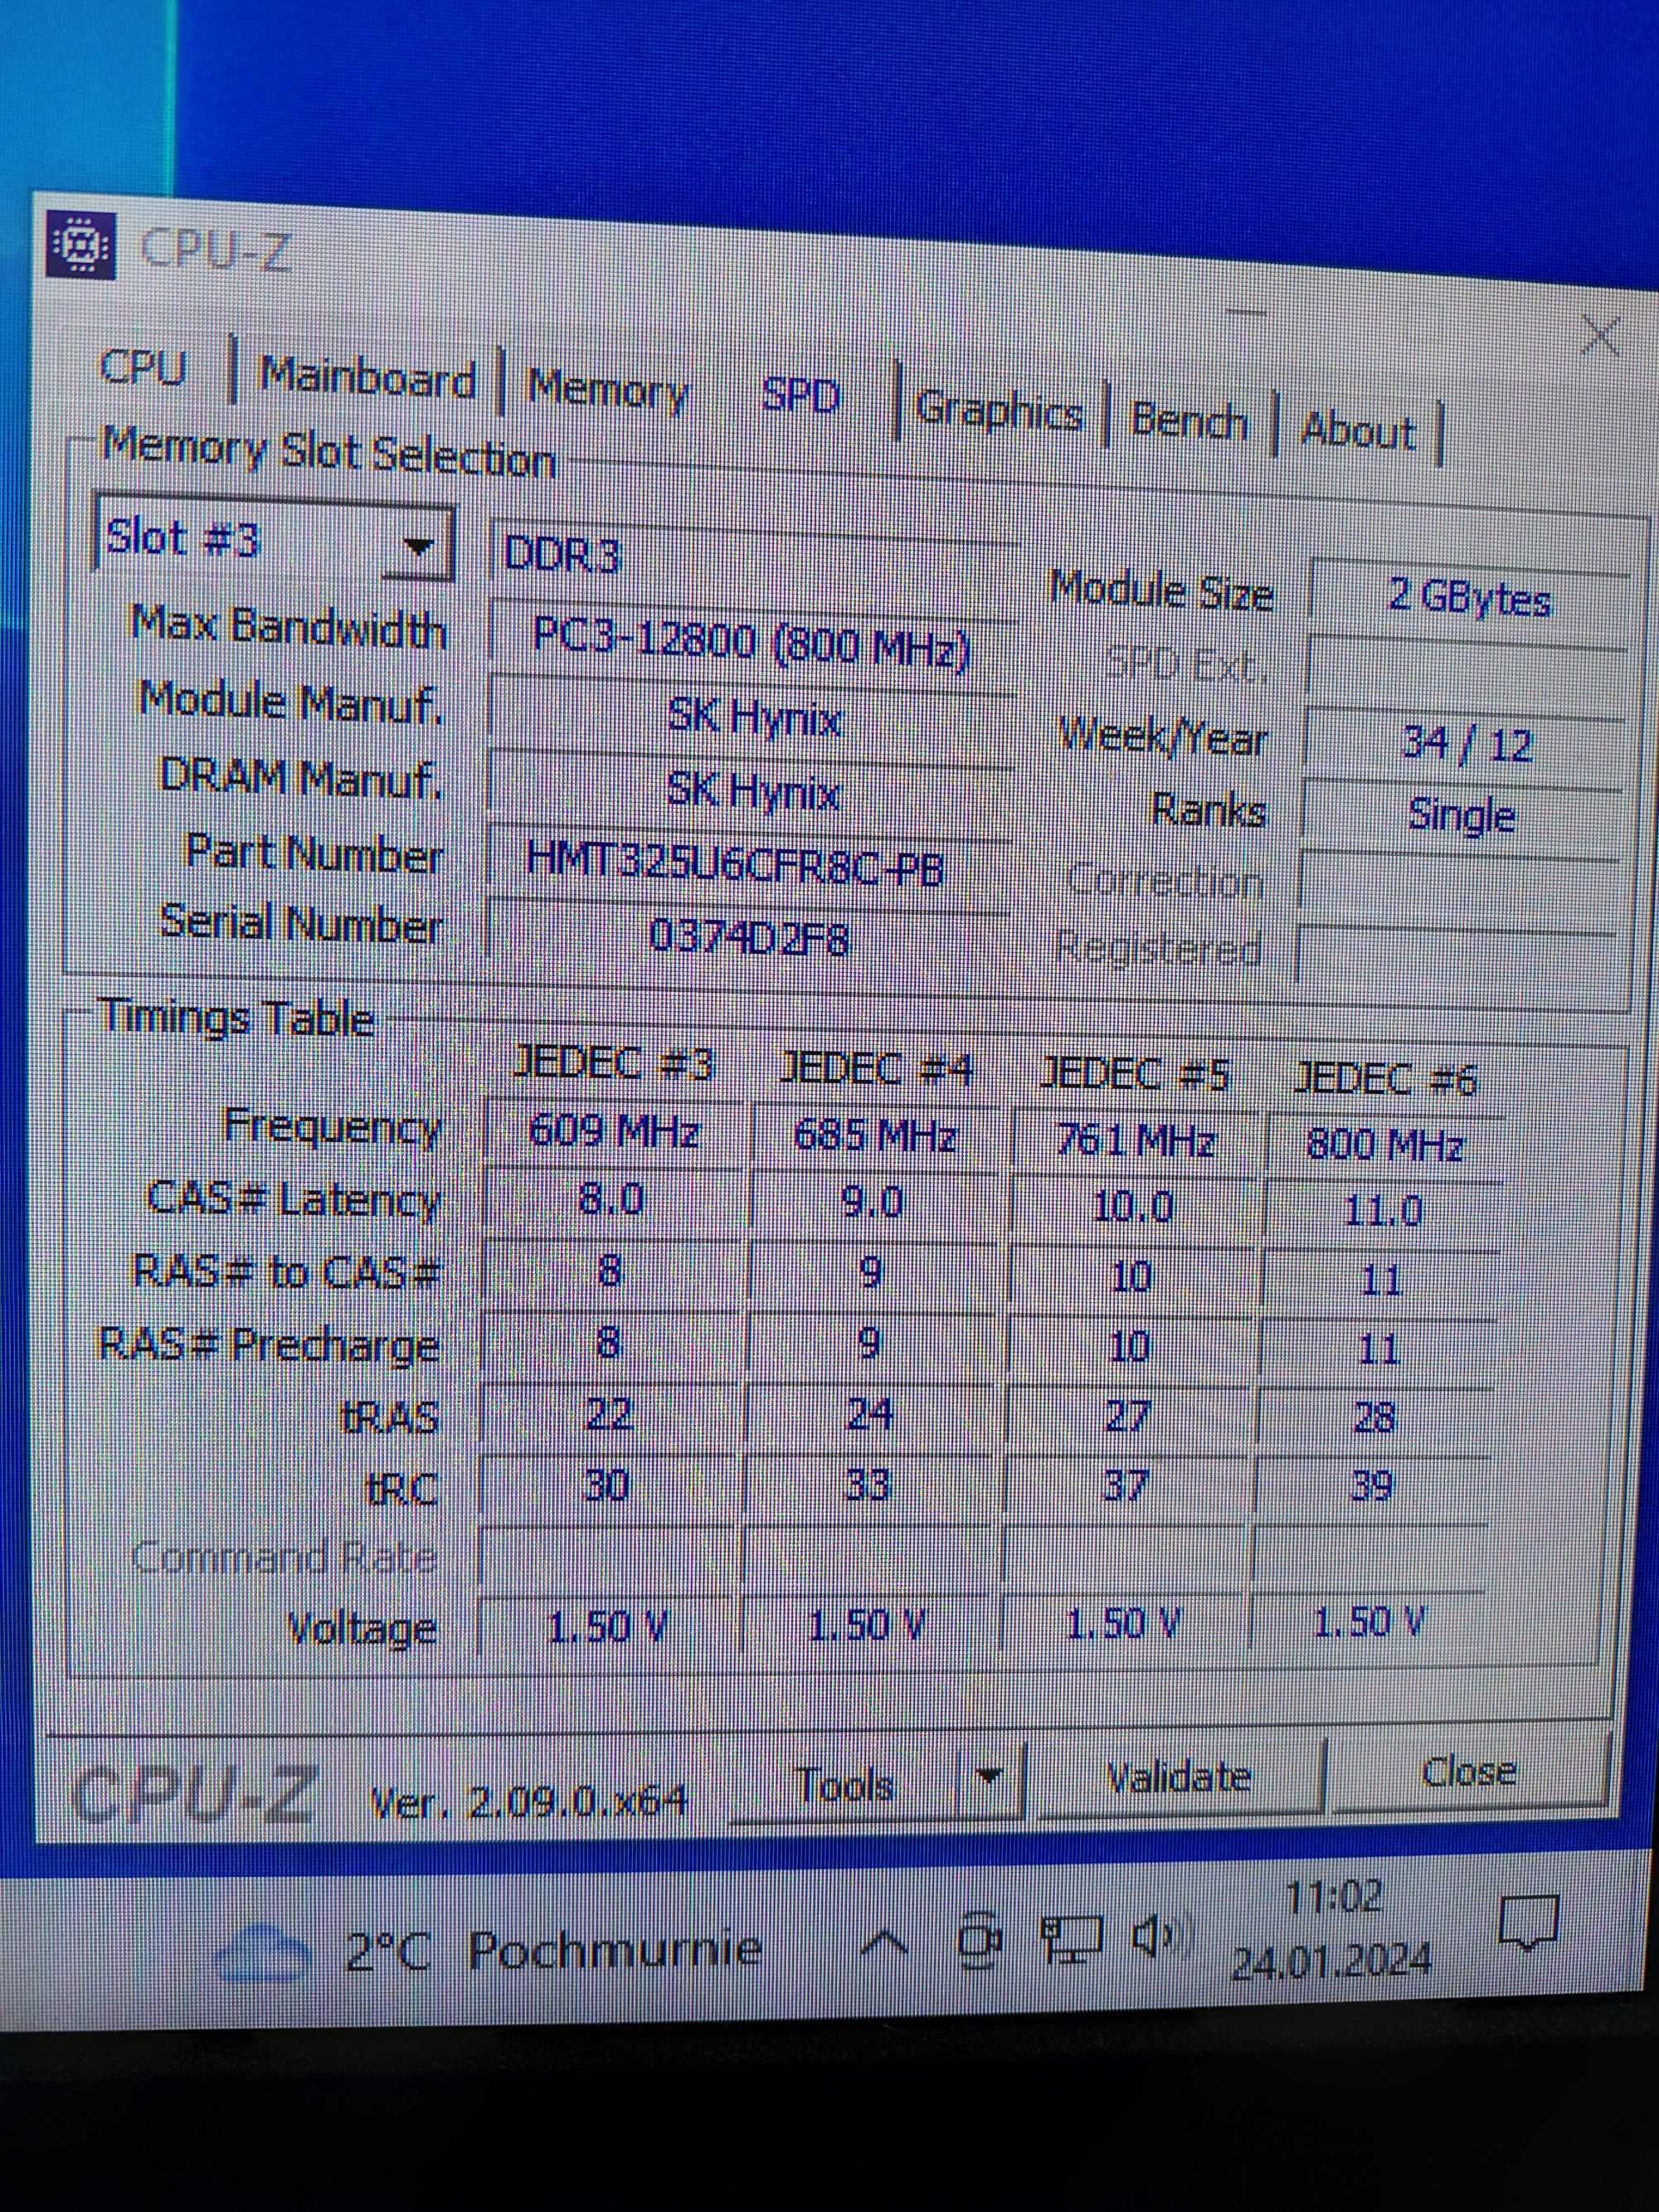 Pamięć RAM DDR3 SK Hynix 4GB do kompter PC 1600